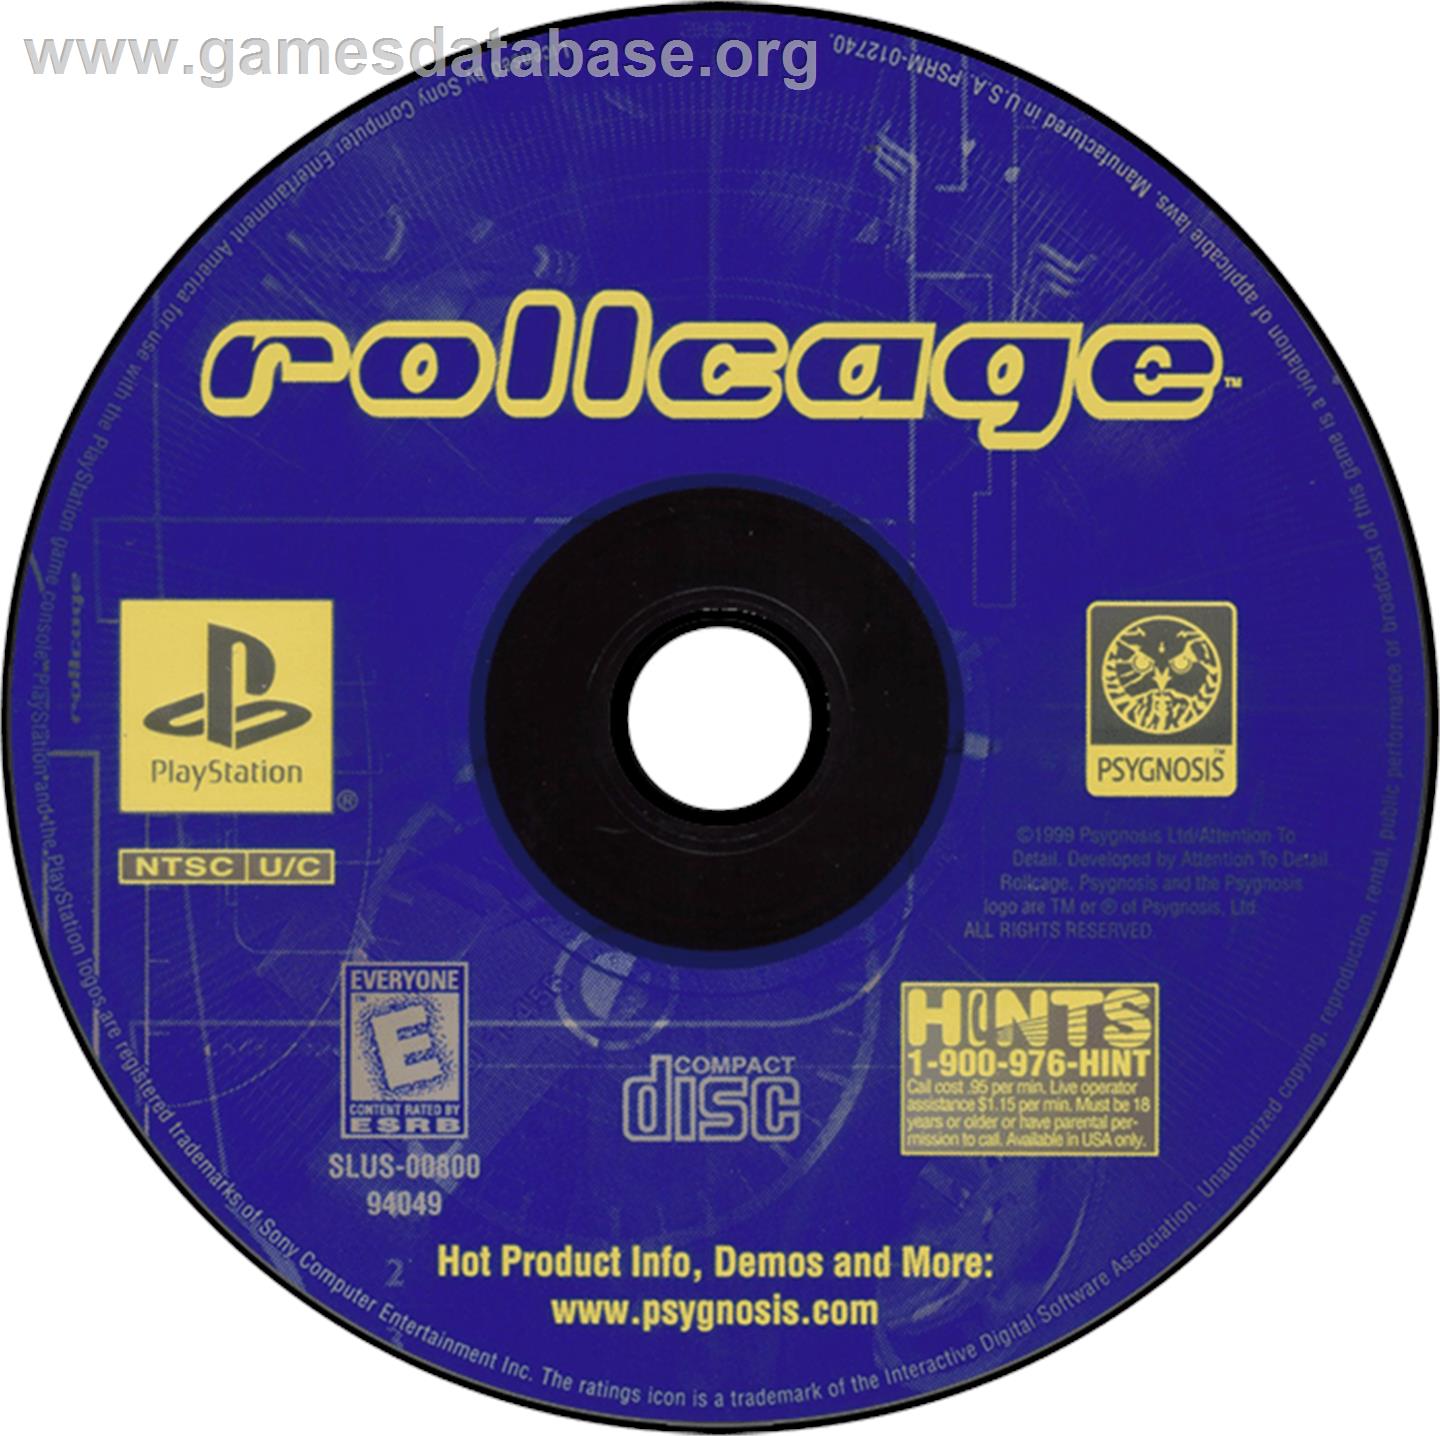 Rollcage - Sony Playstation - Artwork - Disc